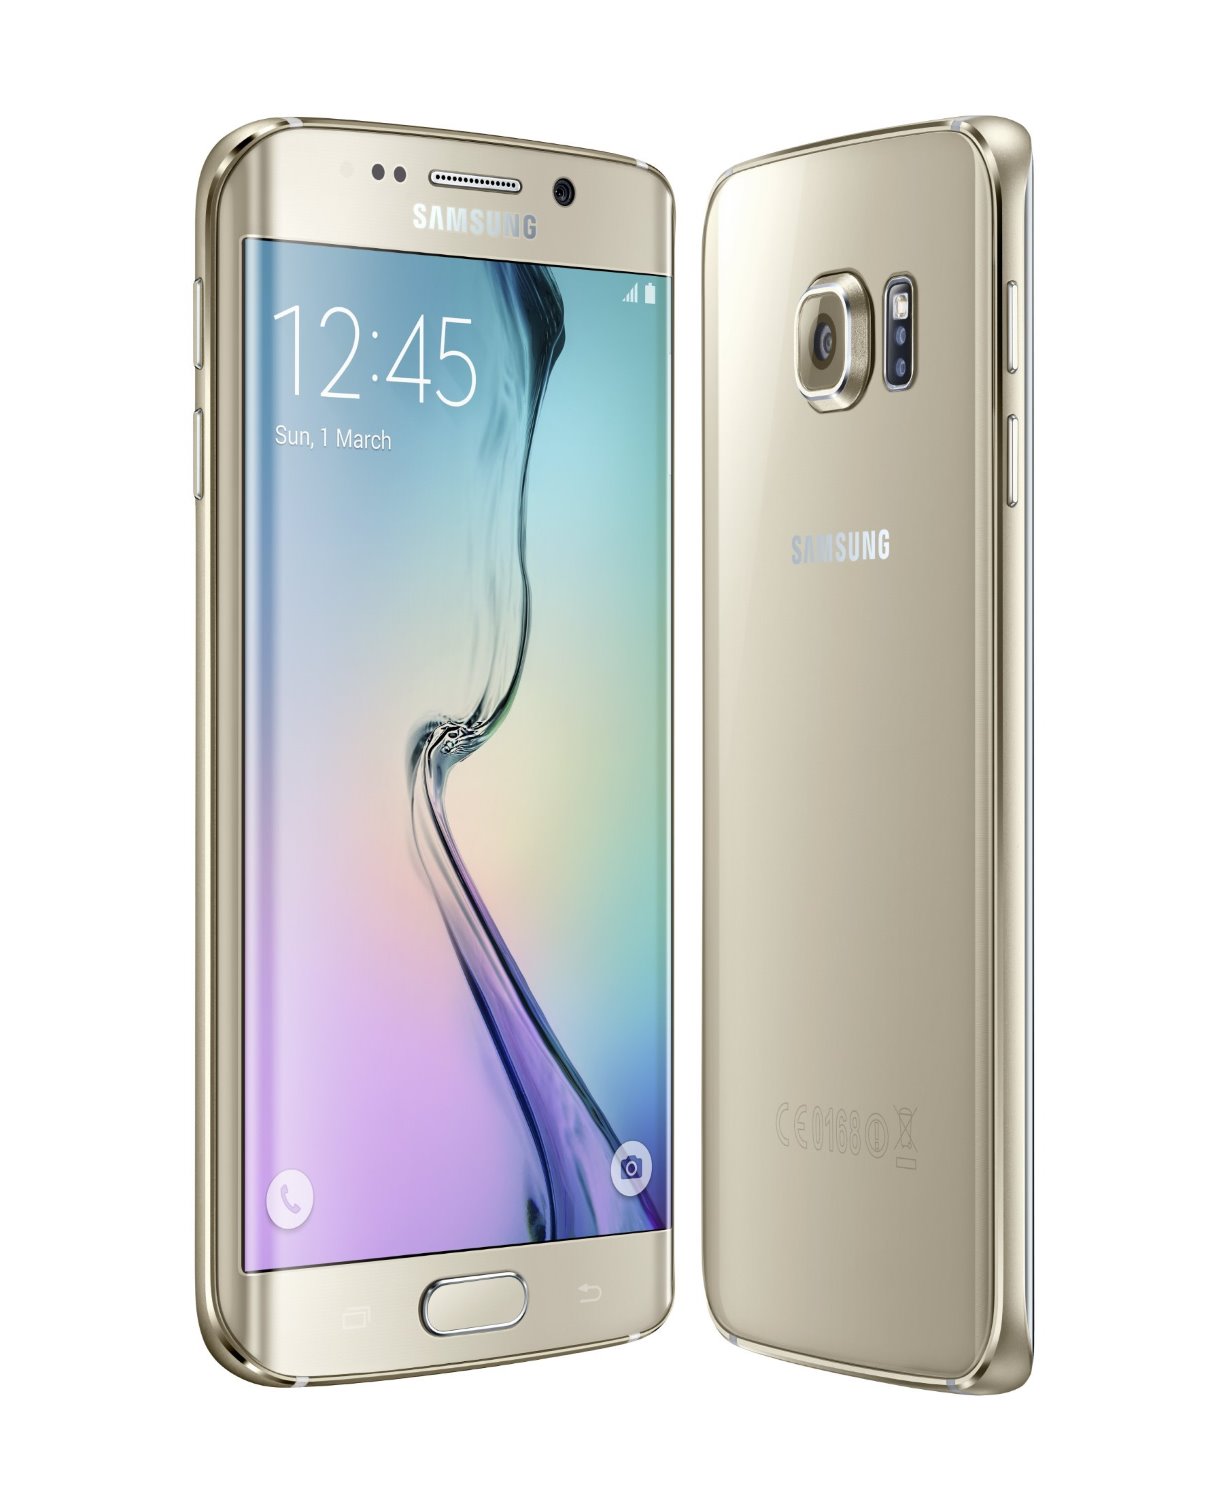 Samsung Galaxy S6 edge - Gold Platinum